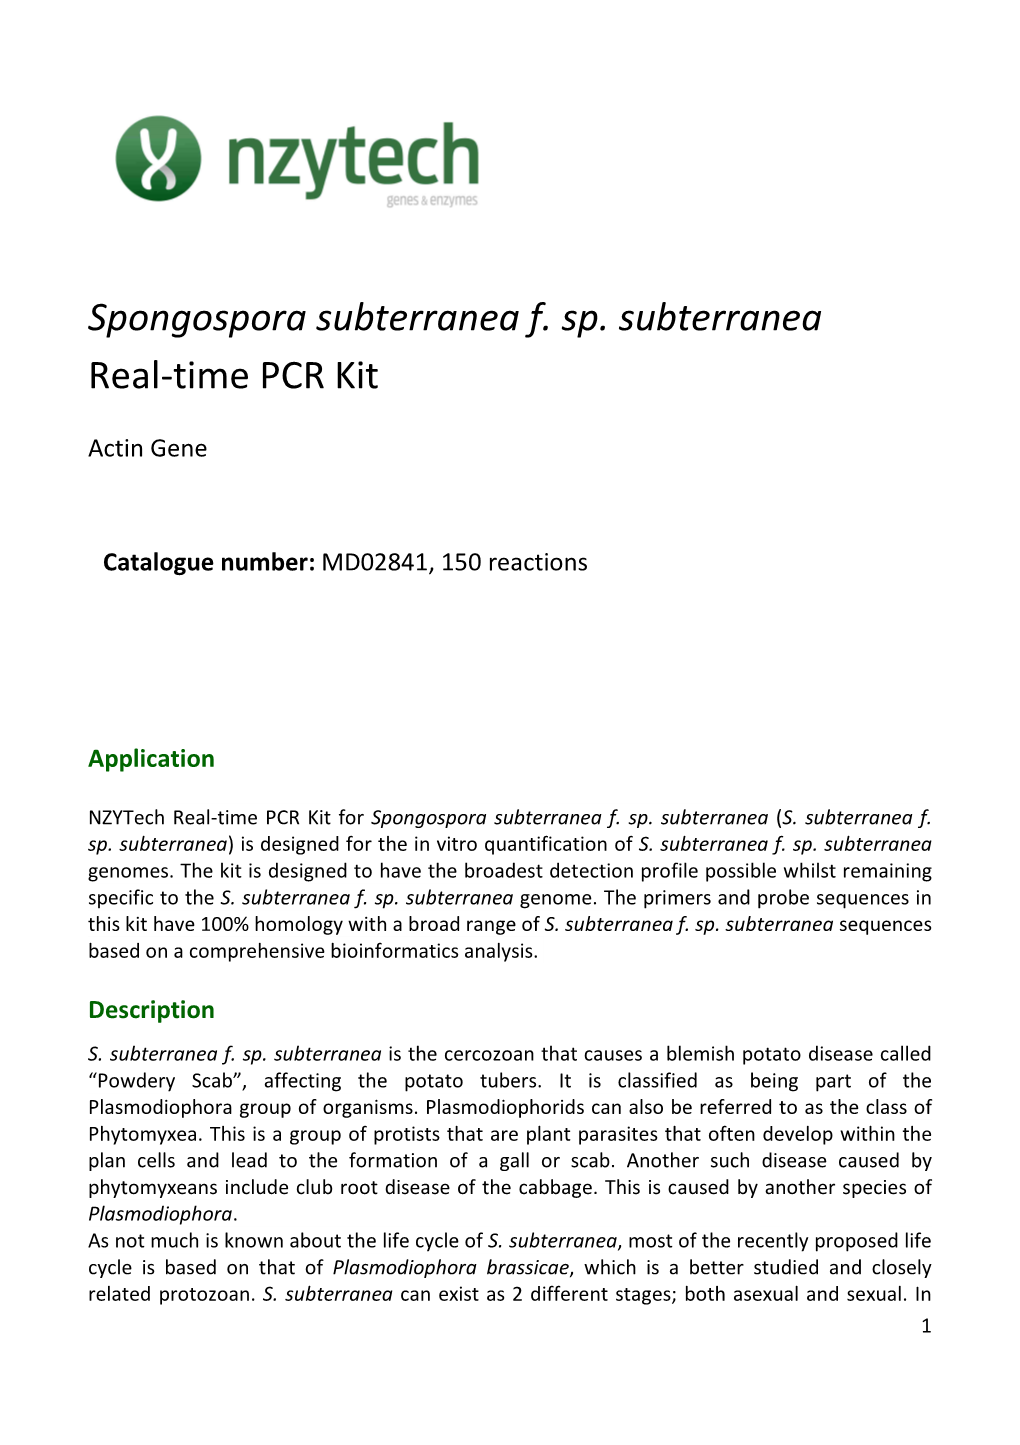 Spongospora Subterranea F. Sp. Subterranea Real-Time PCR Kit